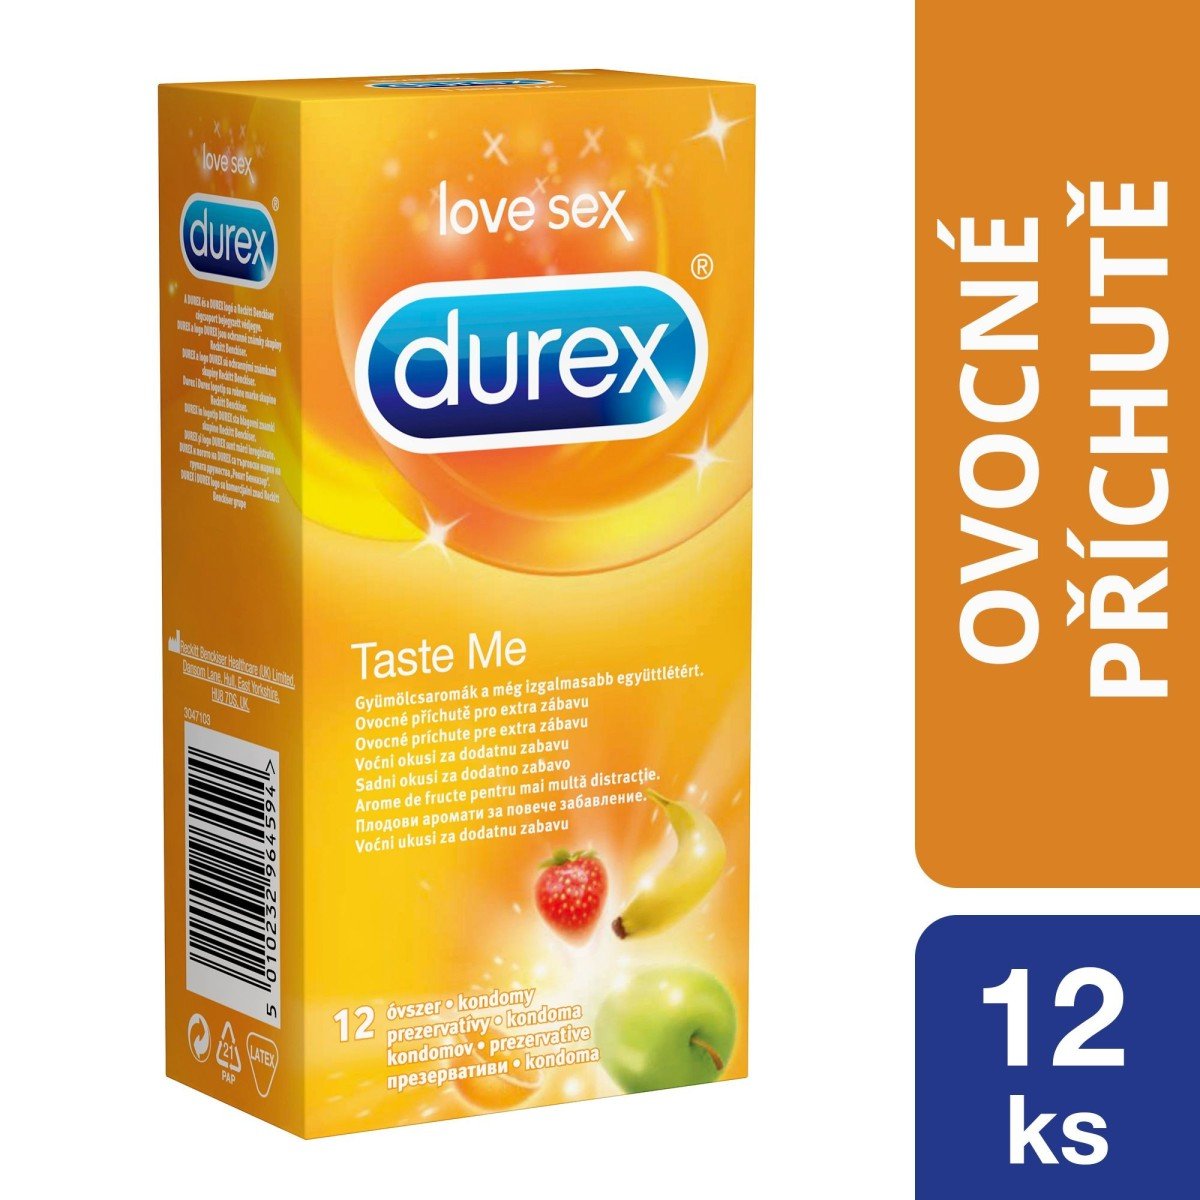 Durex Taste Me Condoms 12 Pack